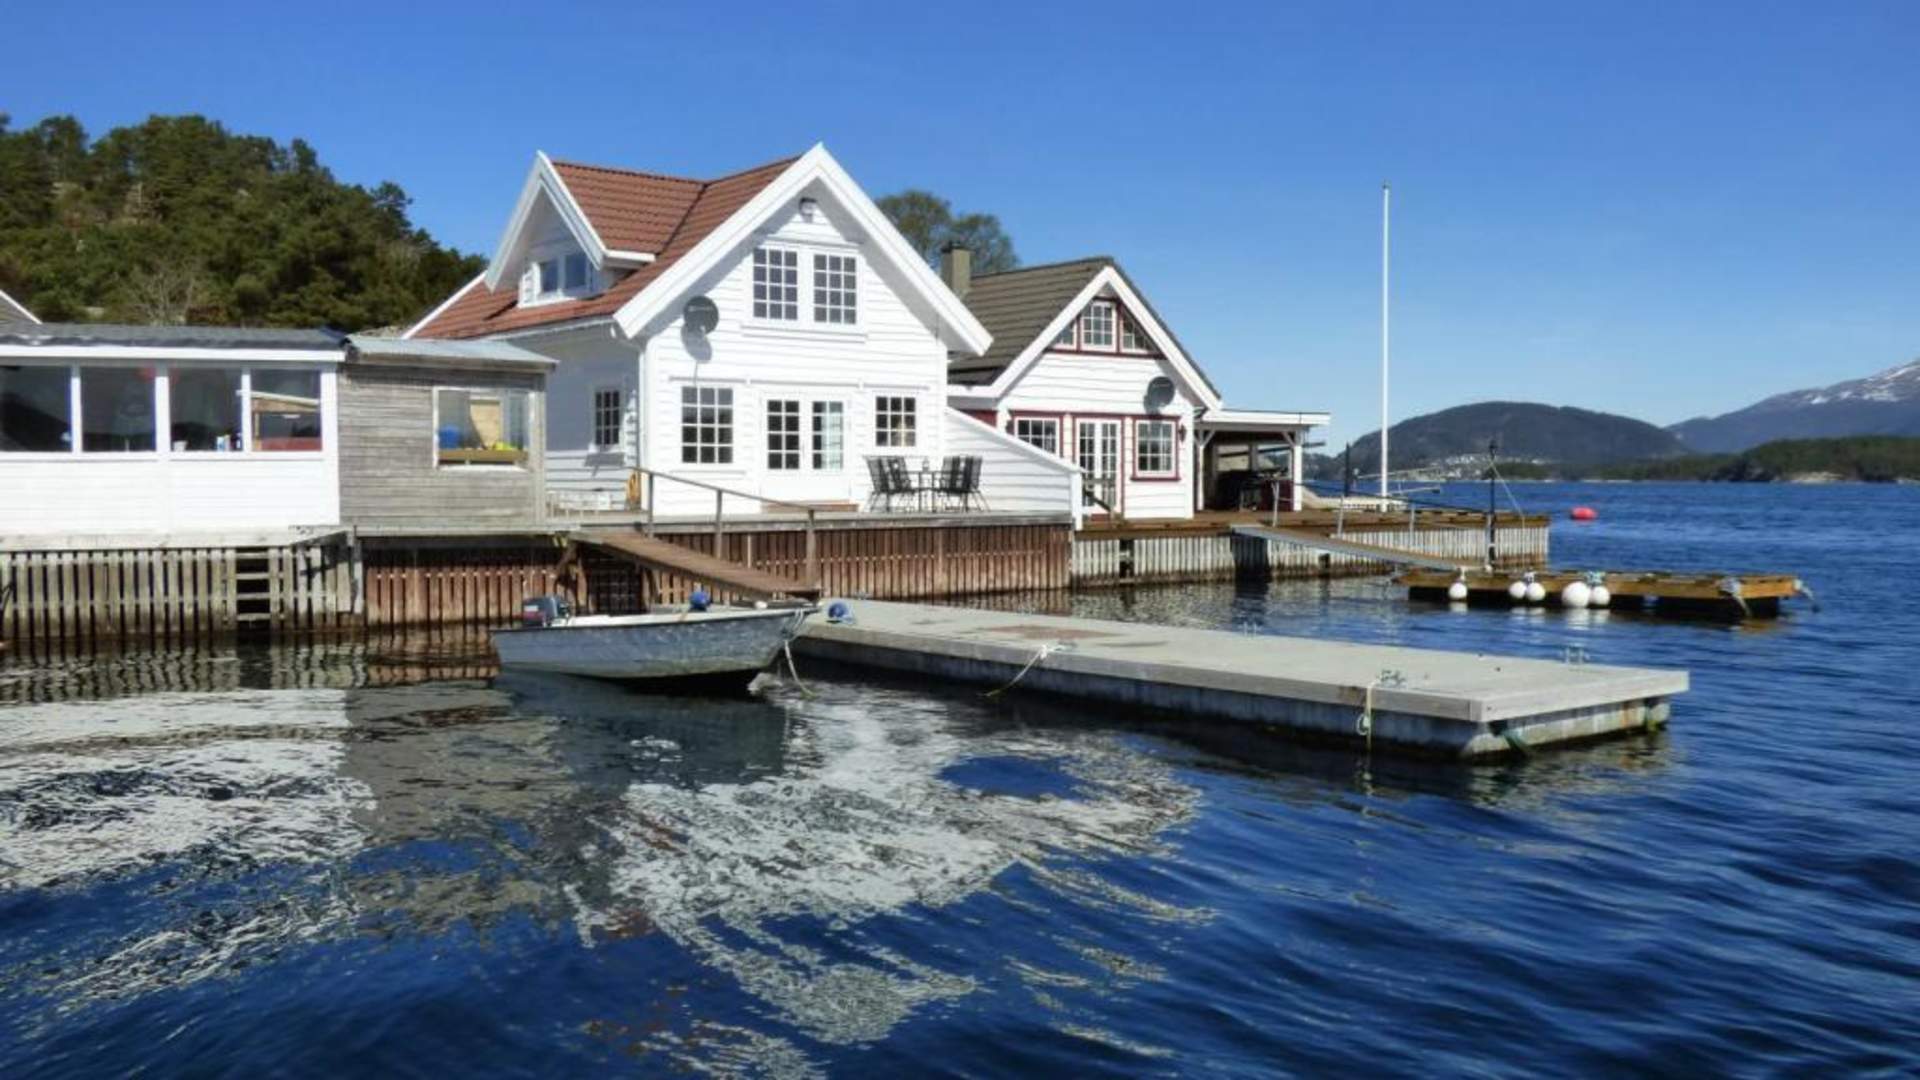 Fjordheim holiday house at Halsnøy